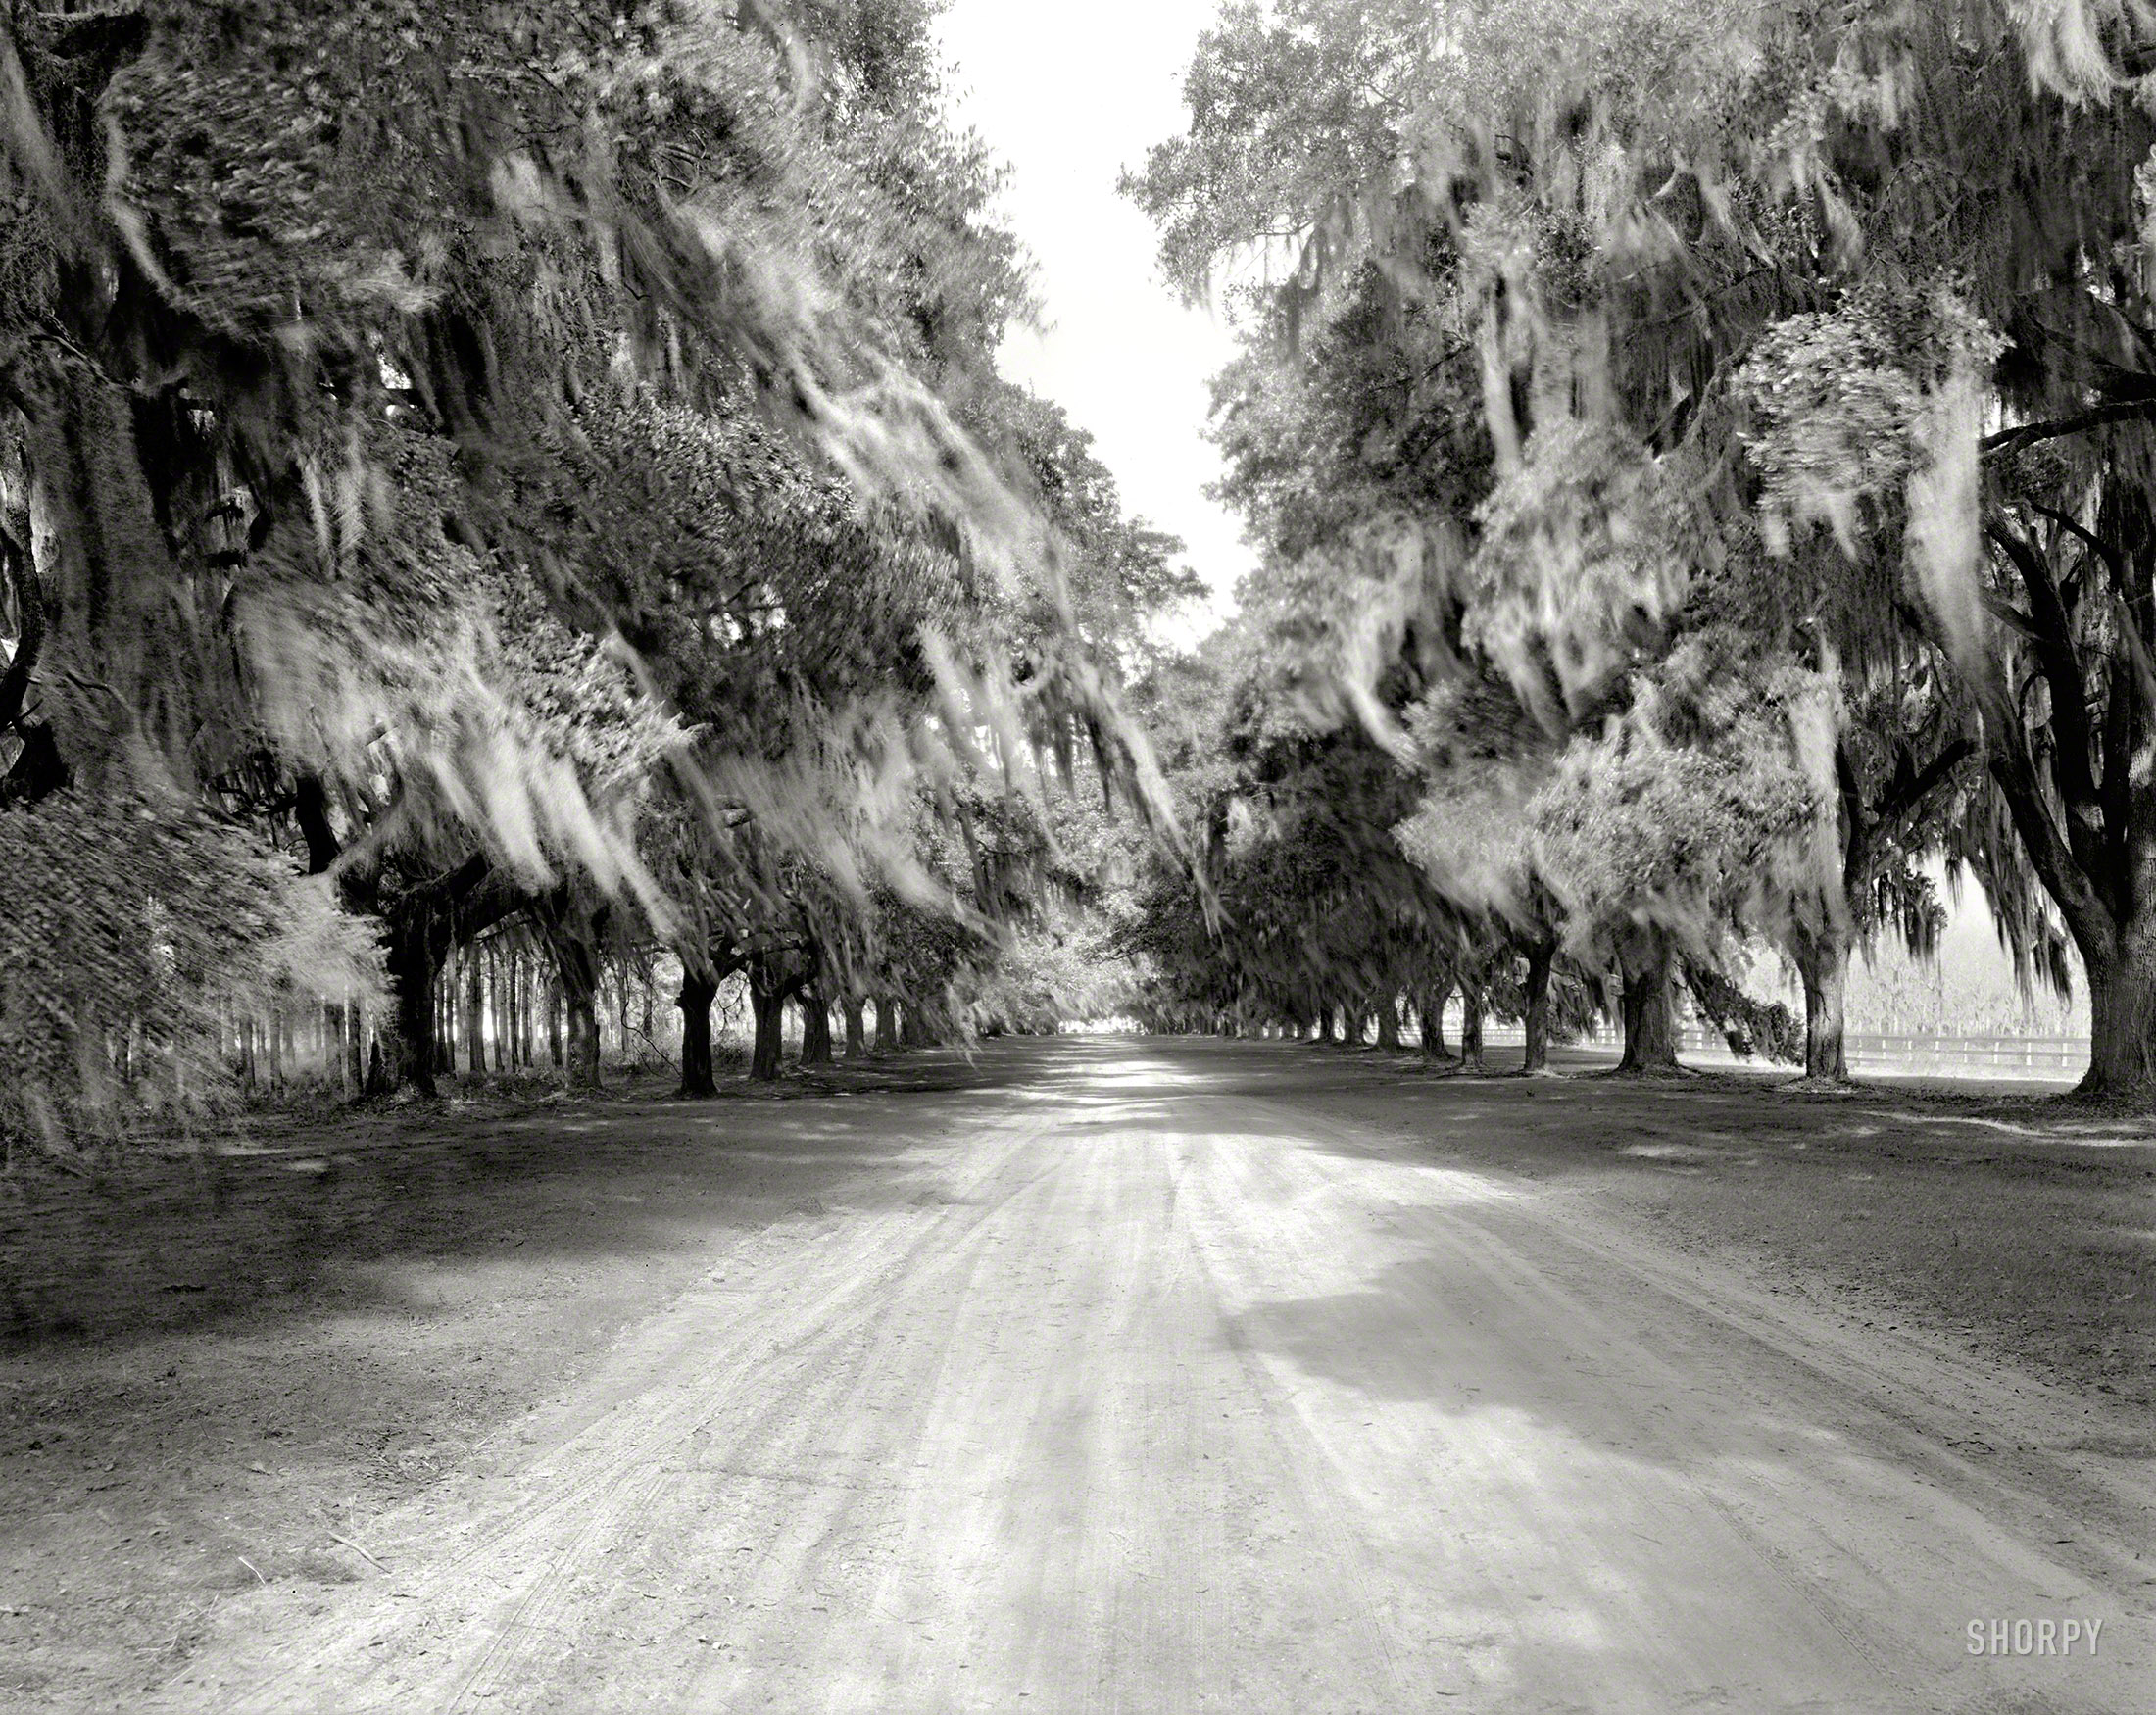 1938. "Boone Hall, avenue of trees, Mount Pleasant vicinity, Charleston County, South Carolina." 8x10 negative by Frances Benjamin Johnston. View full size.